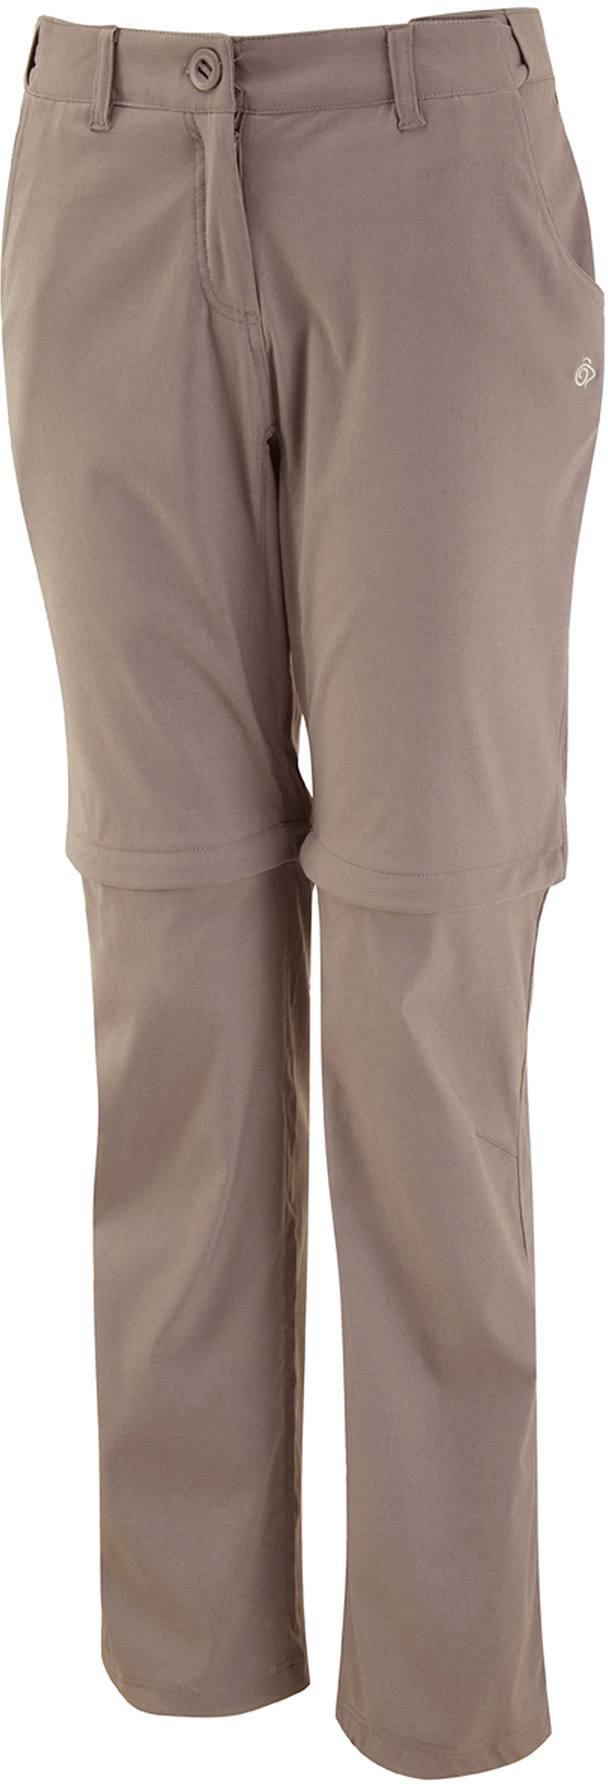 Nosilife Pro Convertible Trousers Women 2015 Sand 14